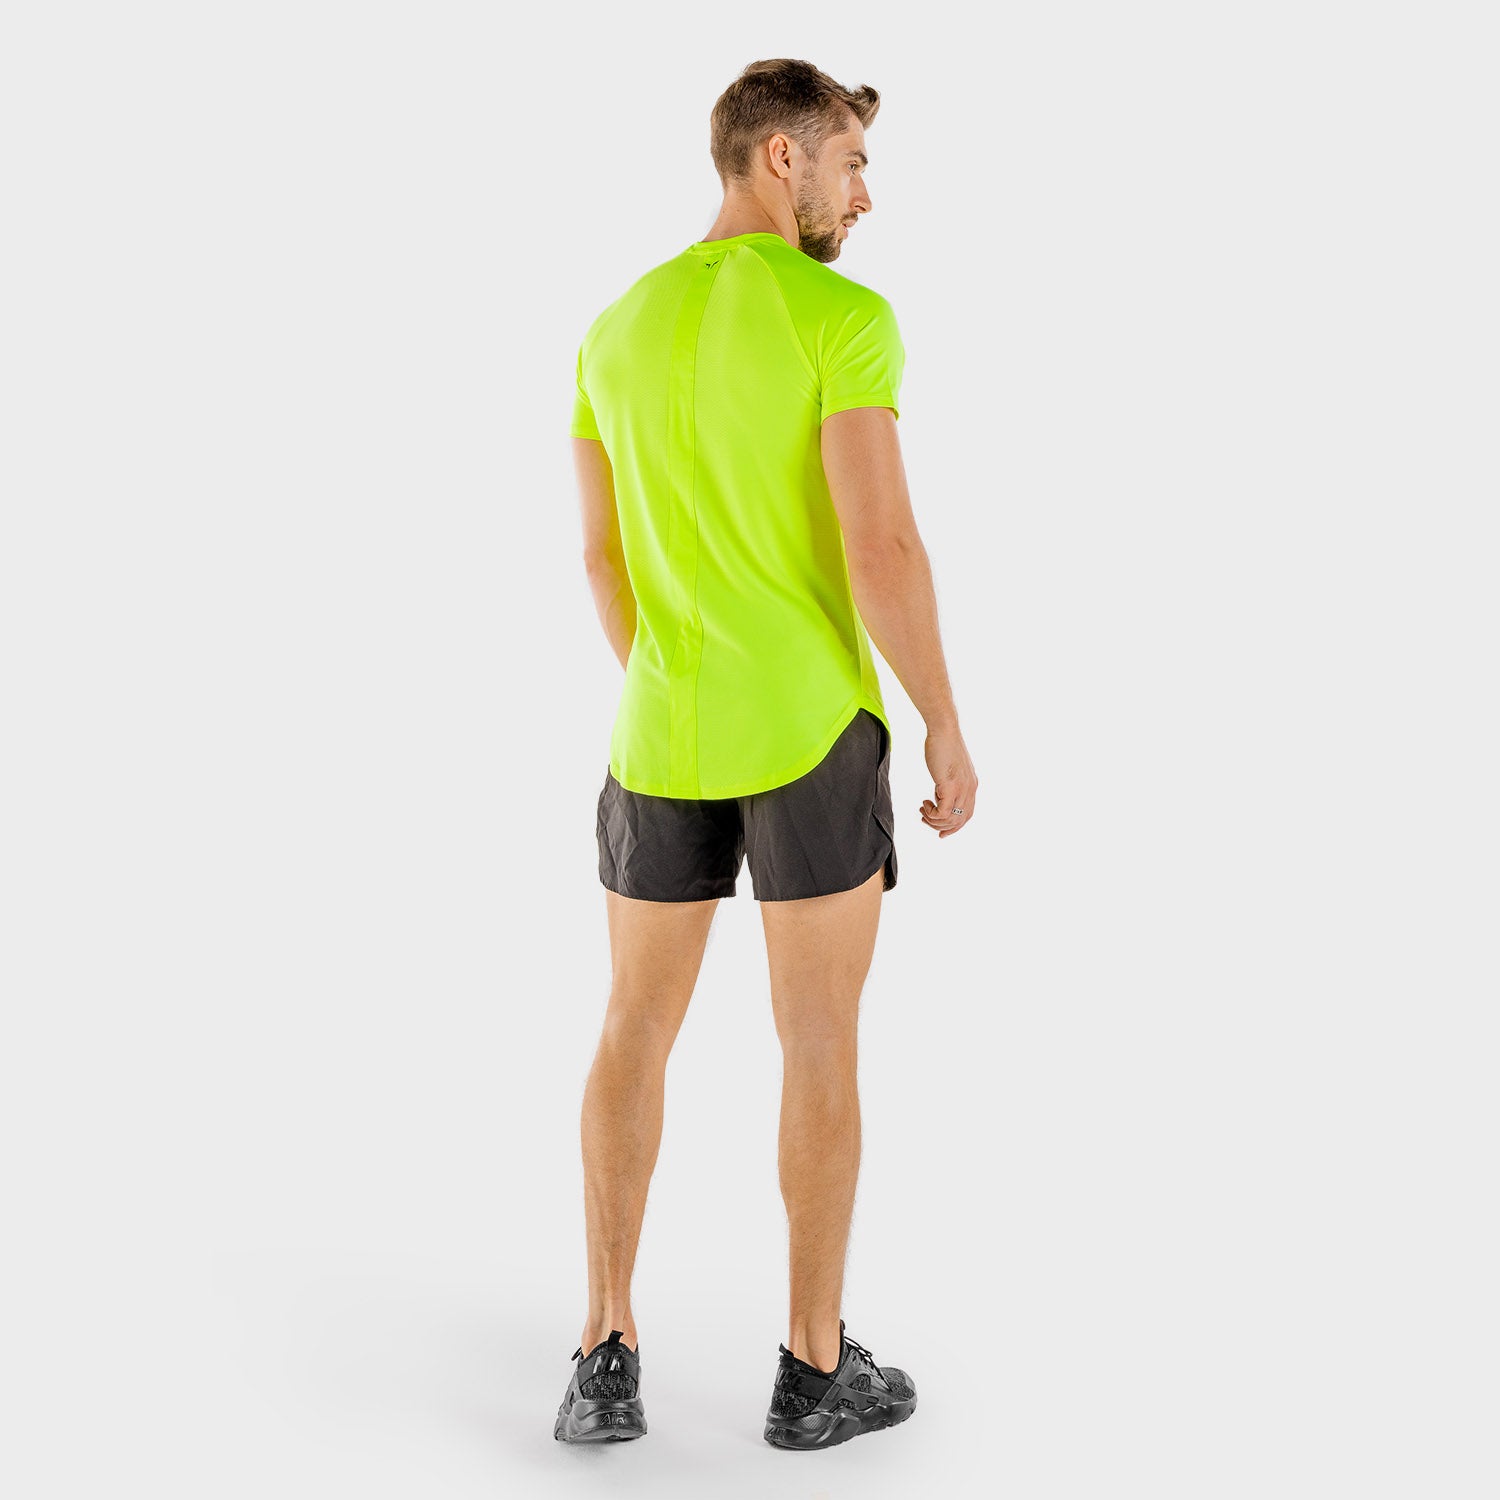 squatwolf-gym-wear-limitless-razor-tee-neon-workout-shirts-for-men